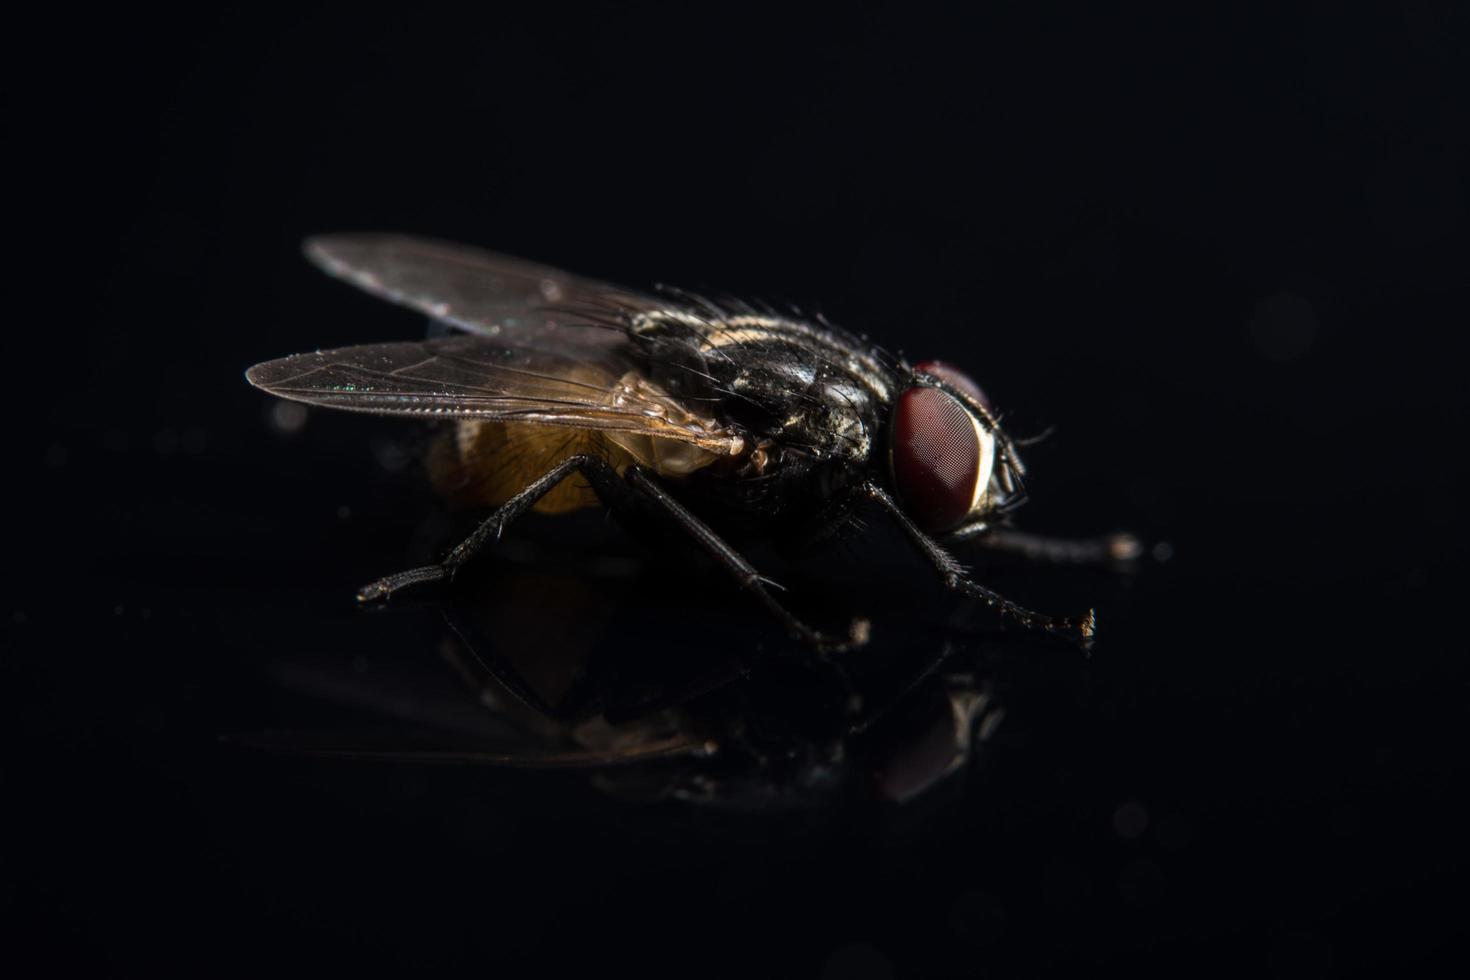 dípteros mosca close-up foto